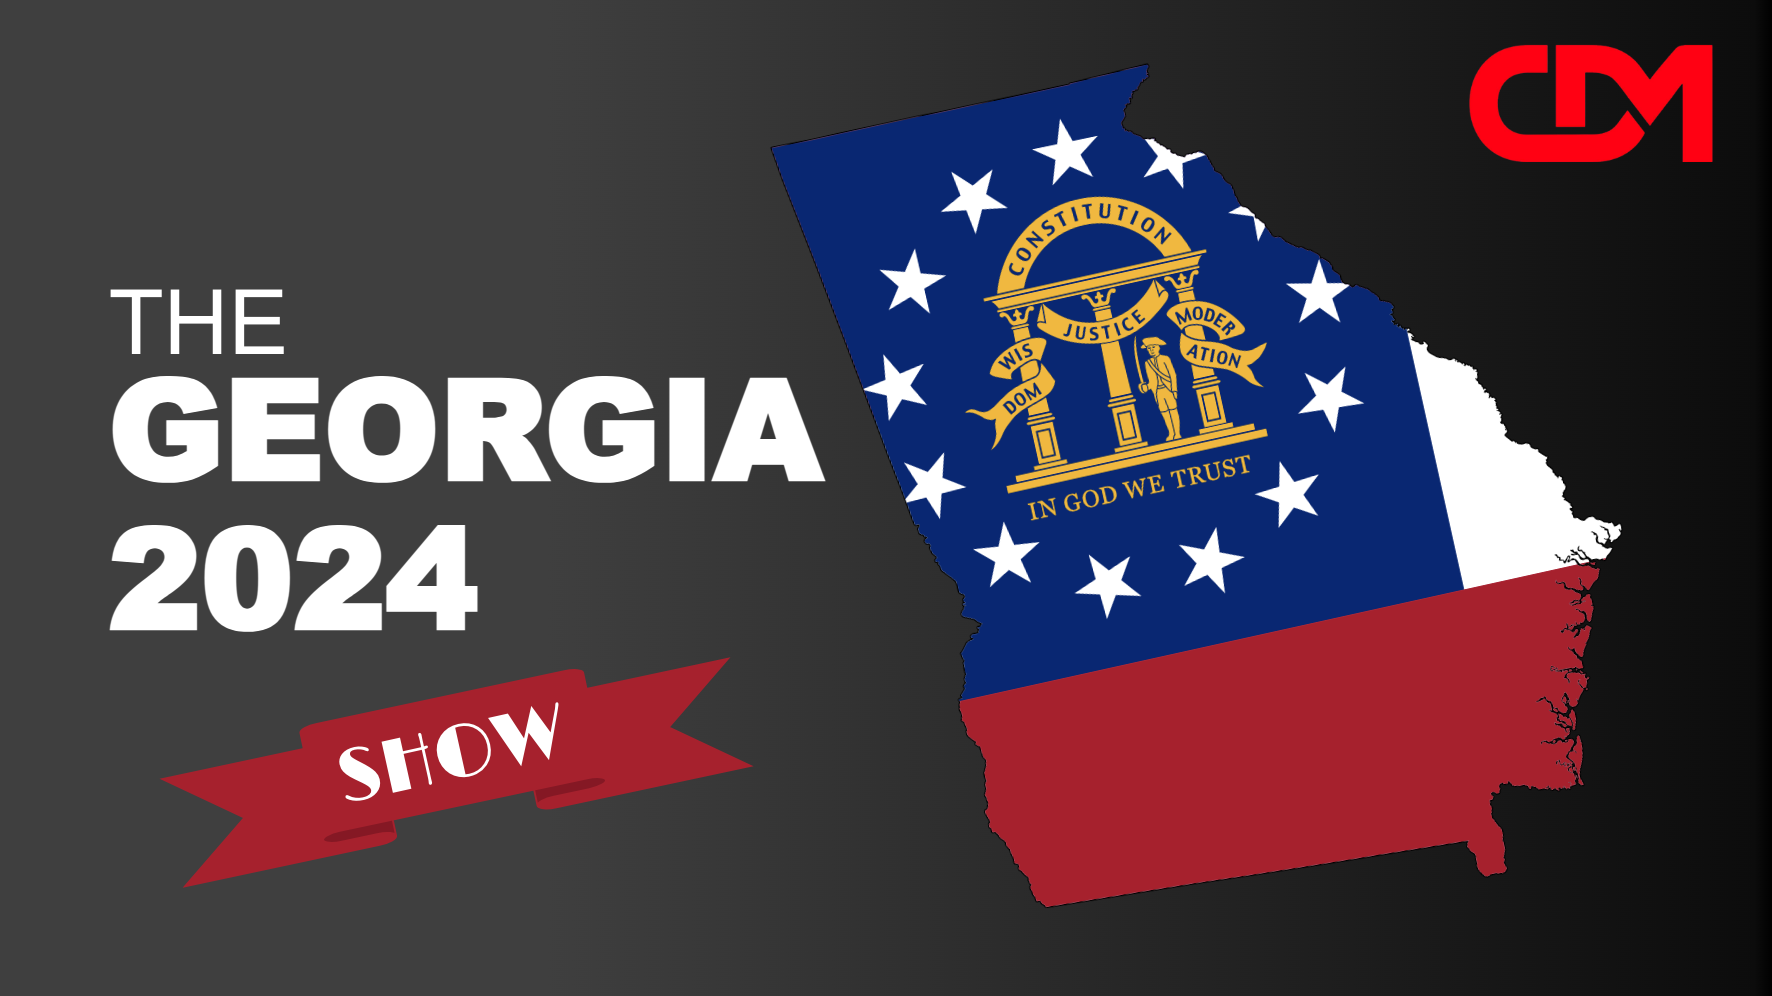 LIVE 2pm EST: The Georgia 2024 Show! With Joe Rossi, BKP, Marjorie Wildcraft